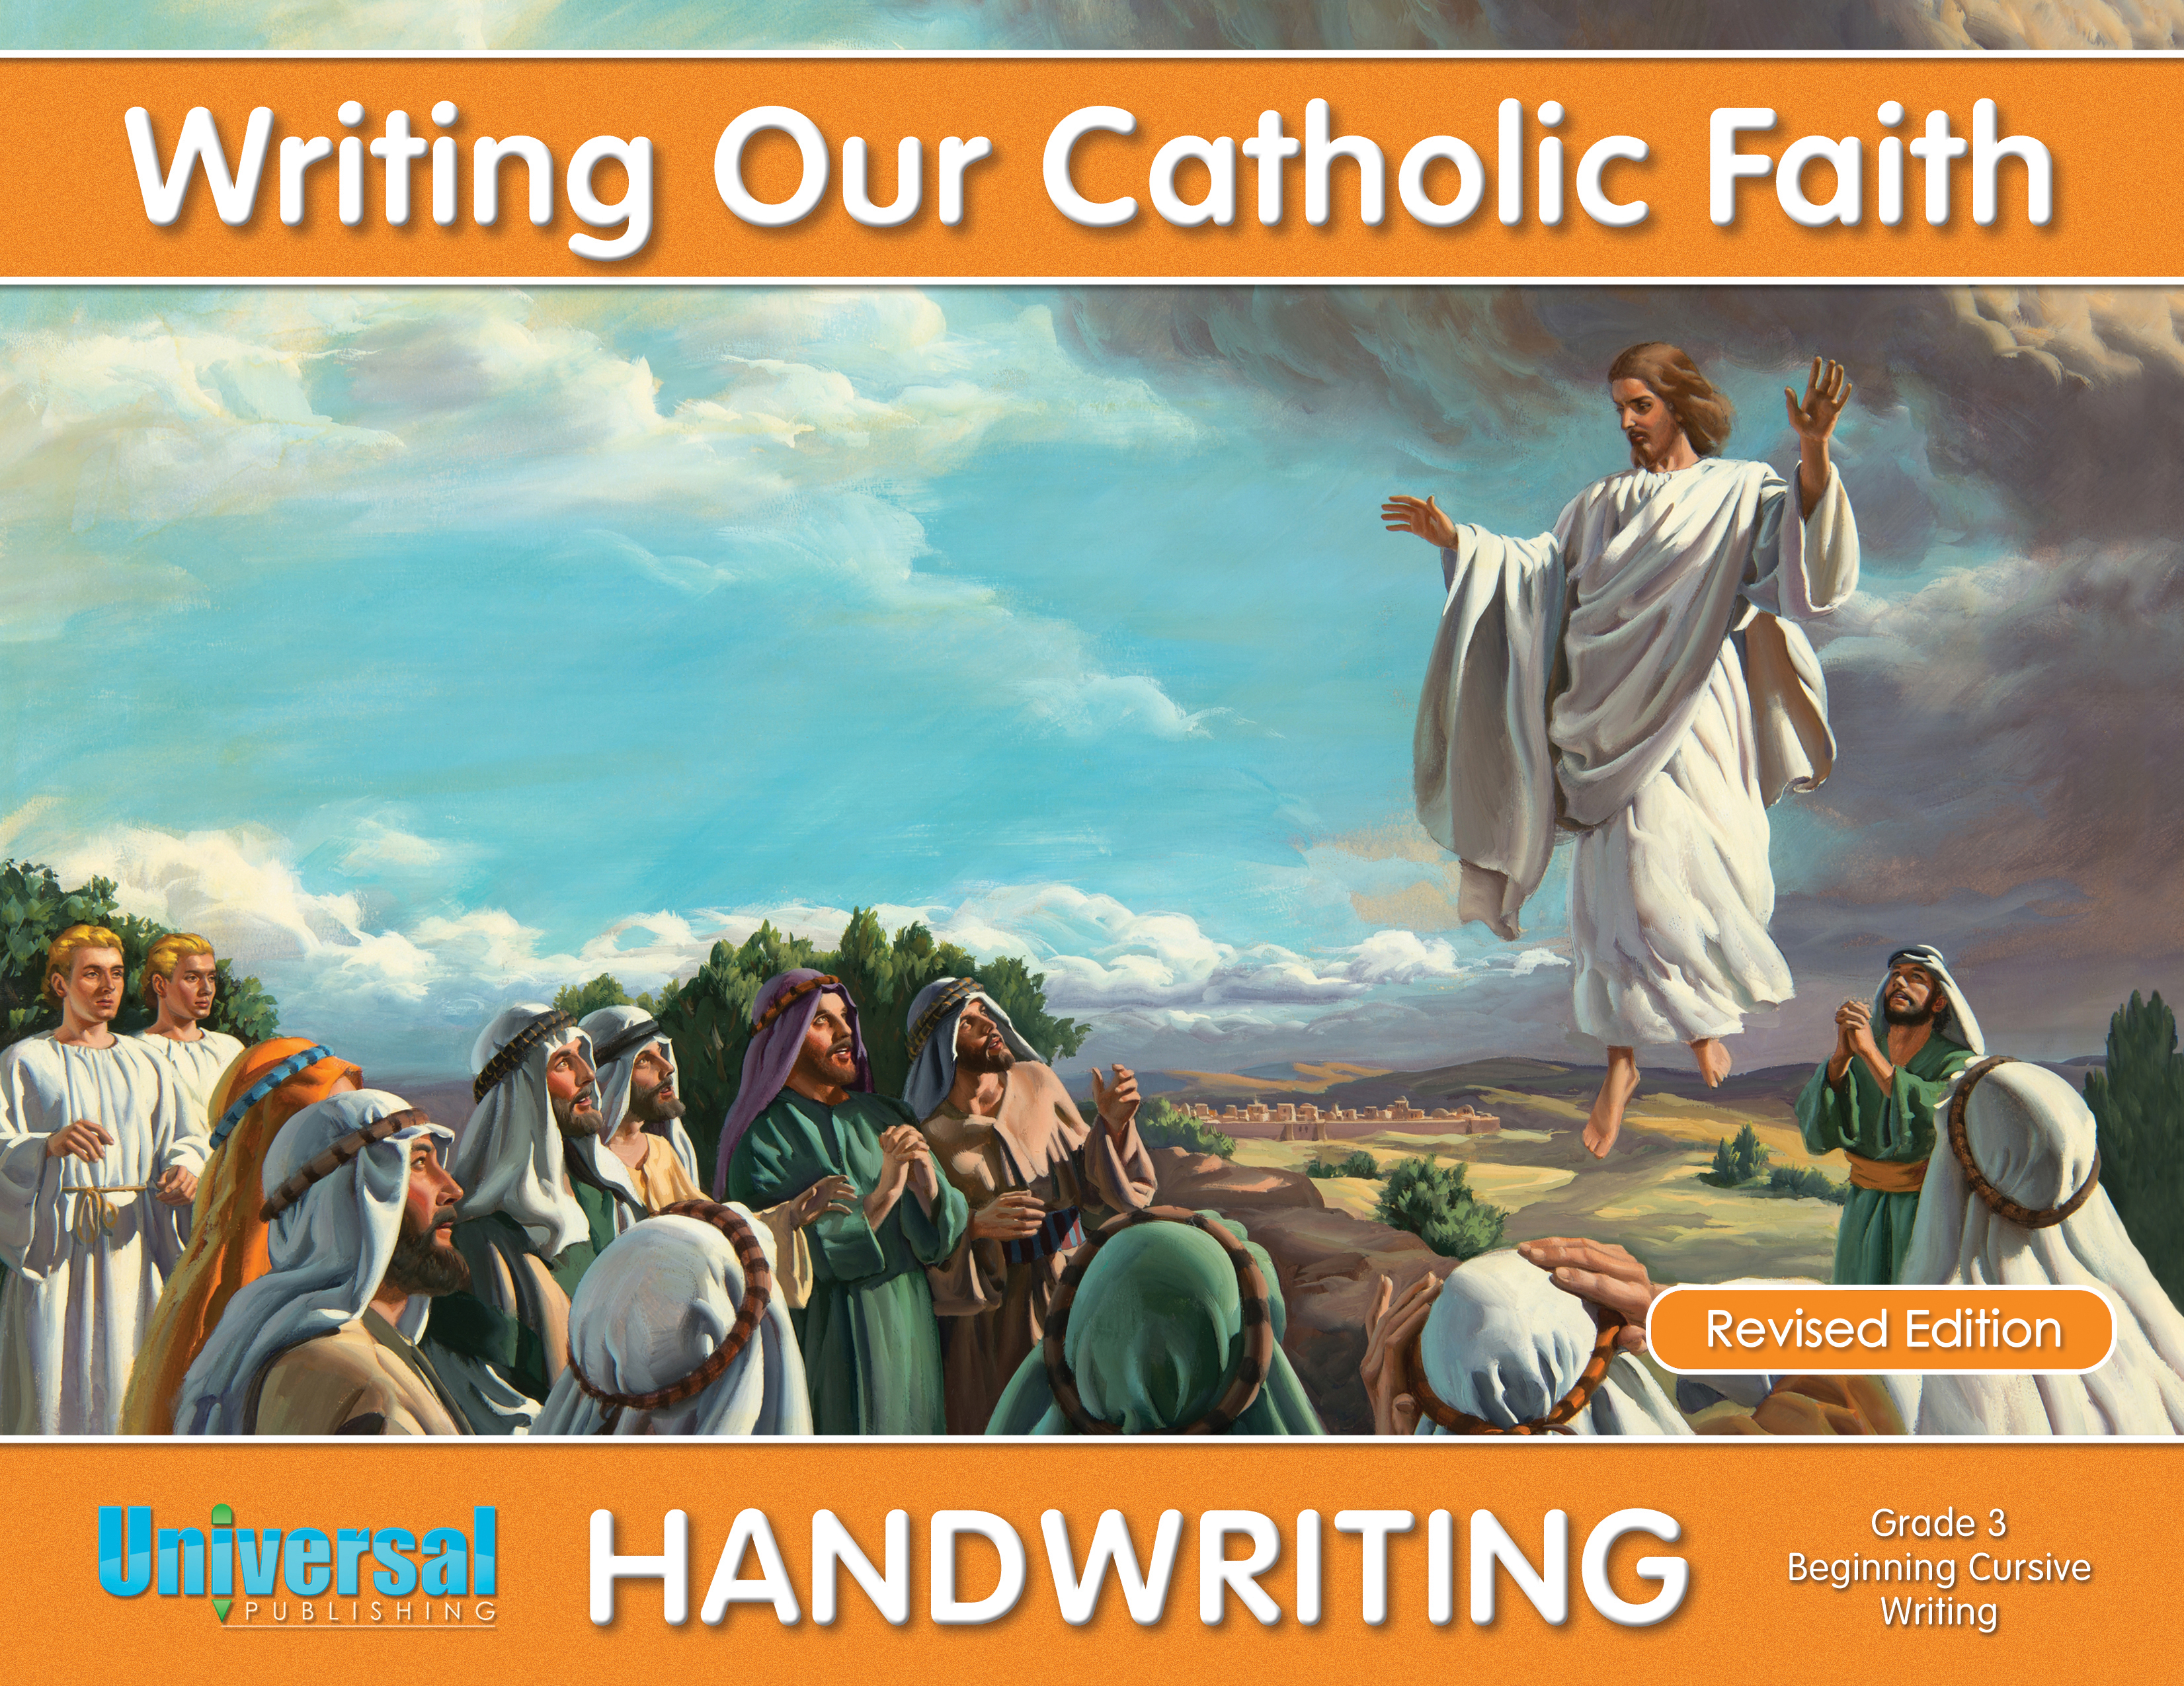 Writing Our Catholic Faith Handwriting Series Universal Publishing Blog